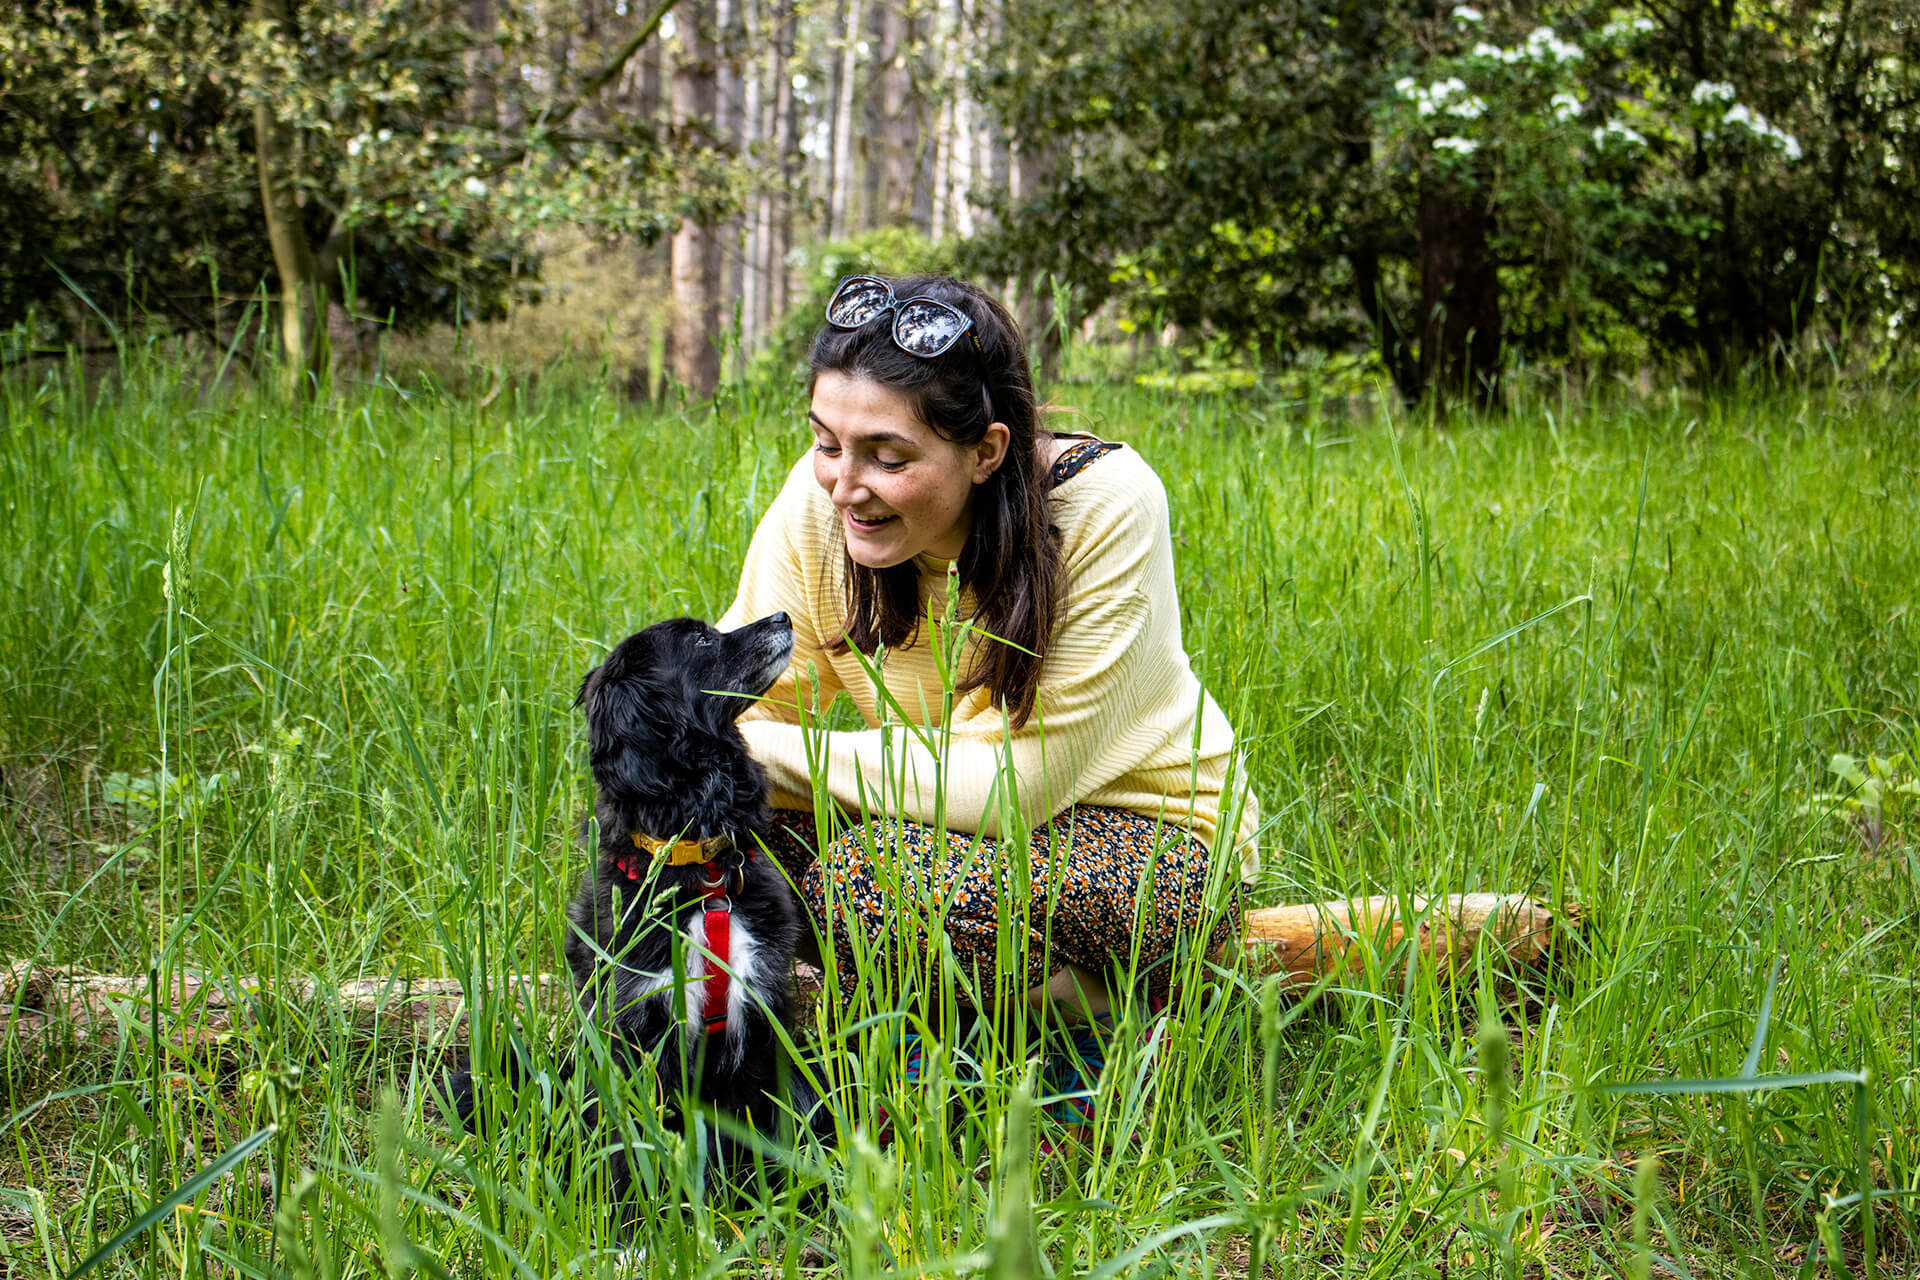 Dog behaviourist Norfolk with dog in the grass in